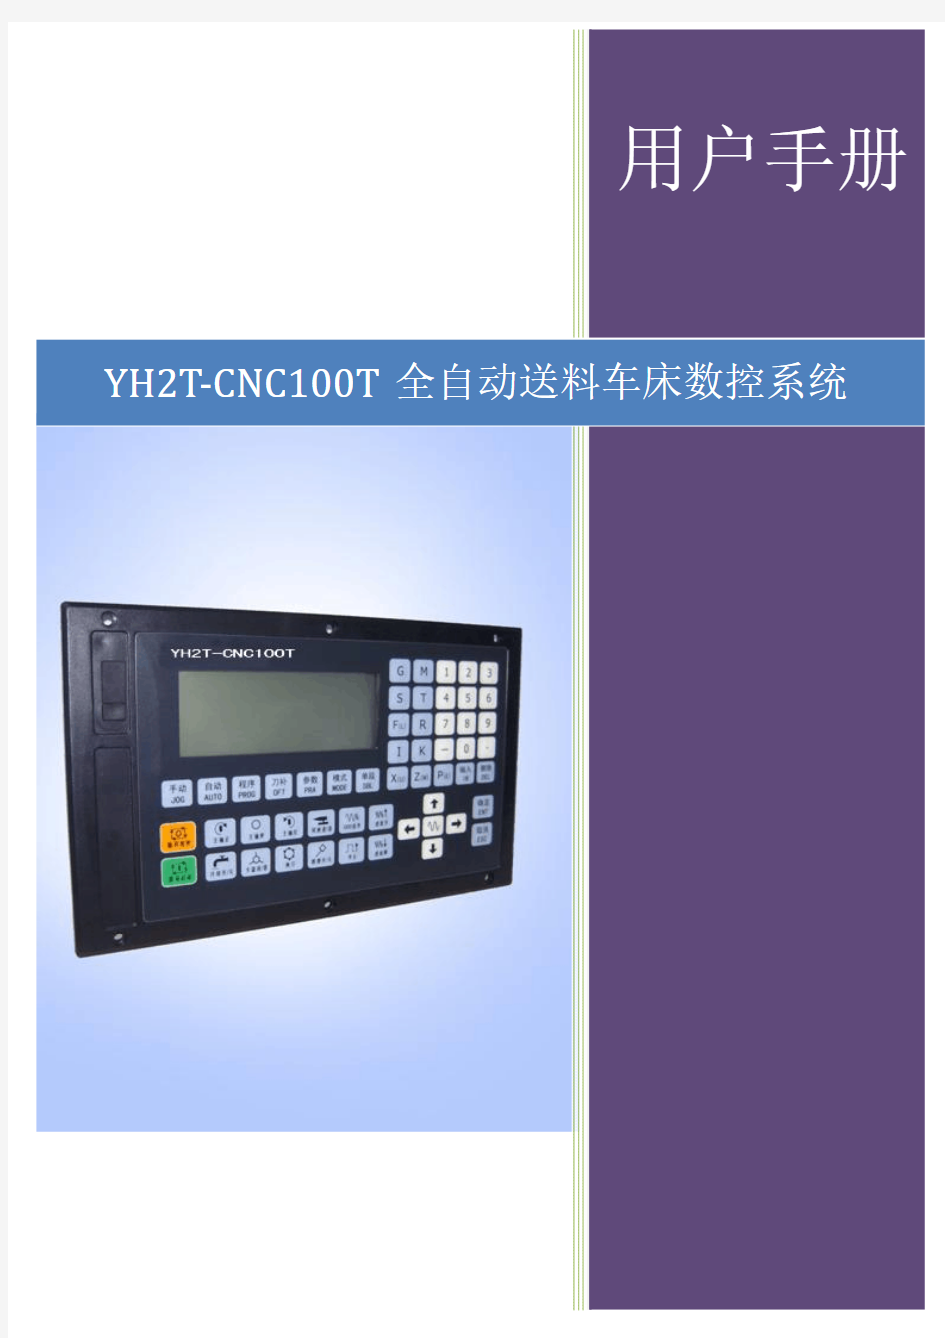 YH2T-CNC100T车床数控系统说明书